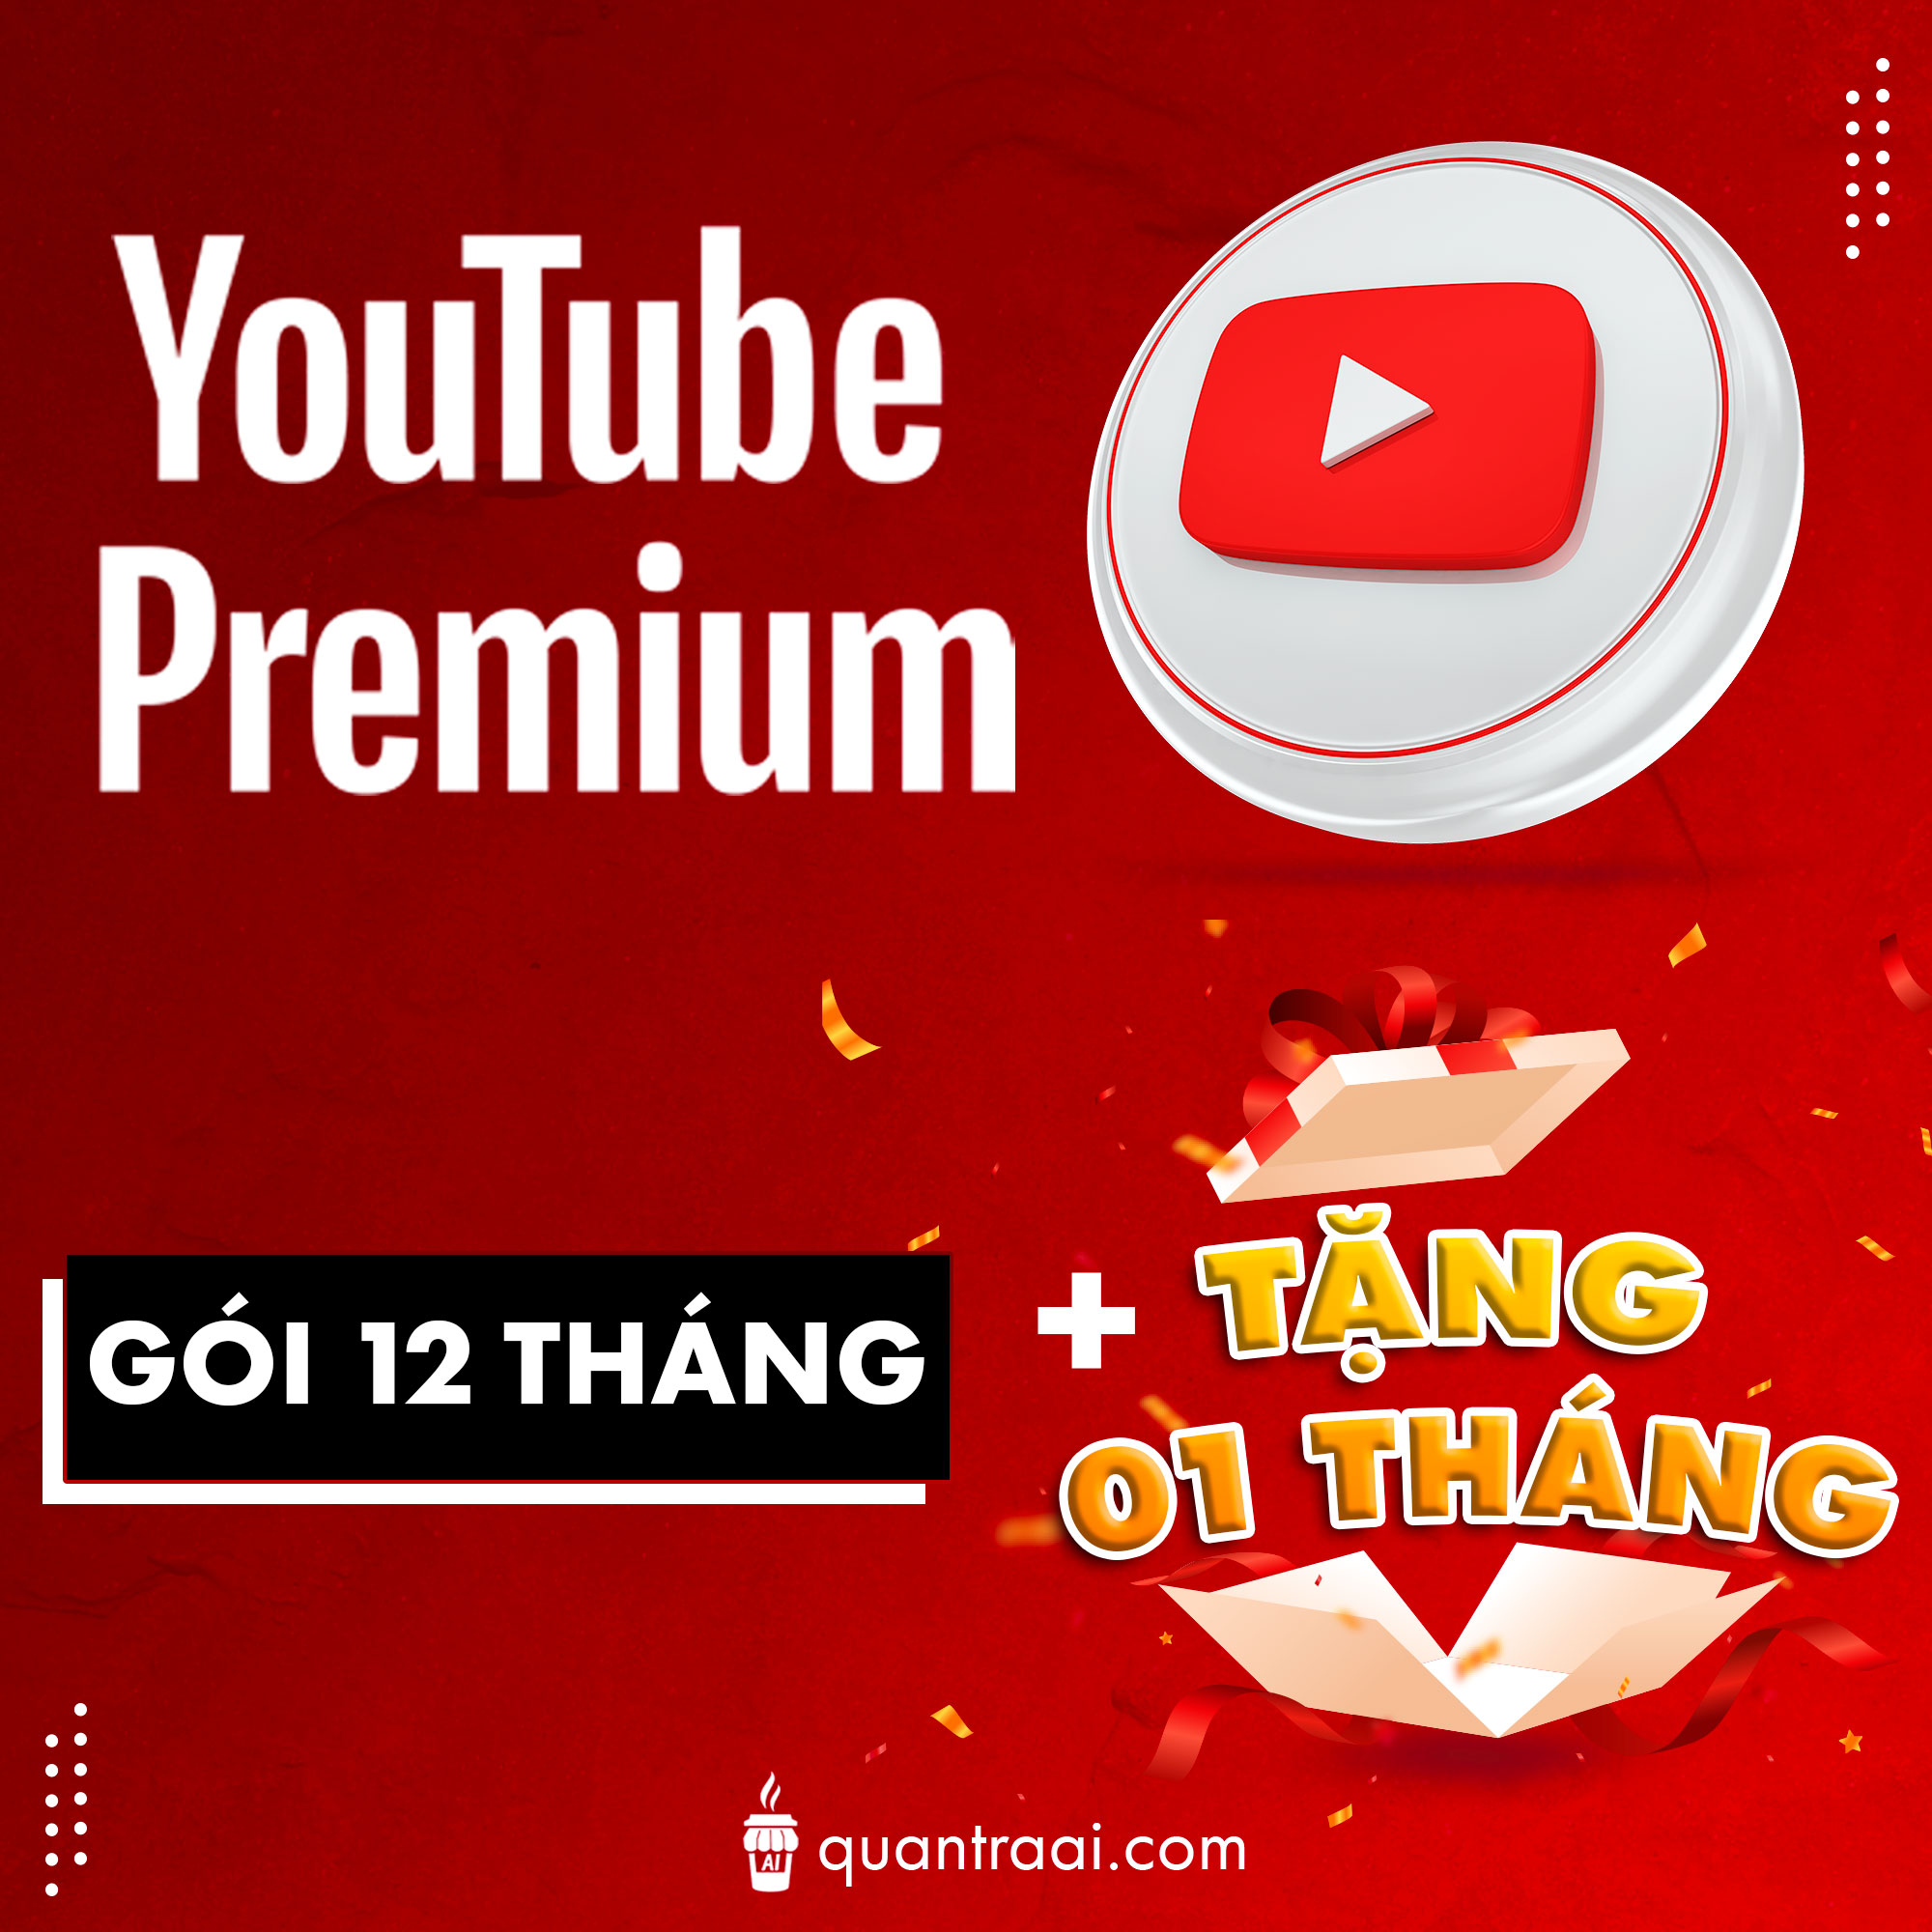 Youtube Premium 12 tháng